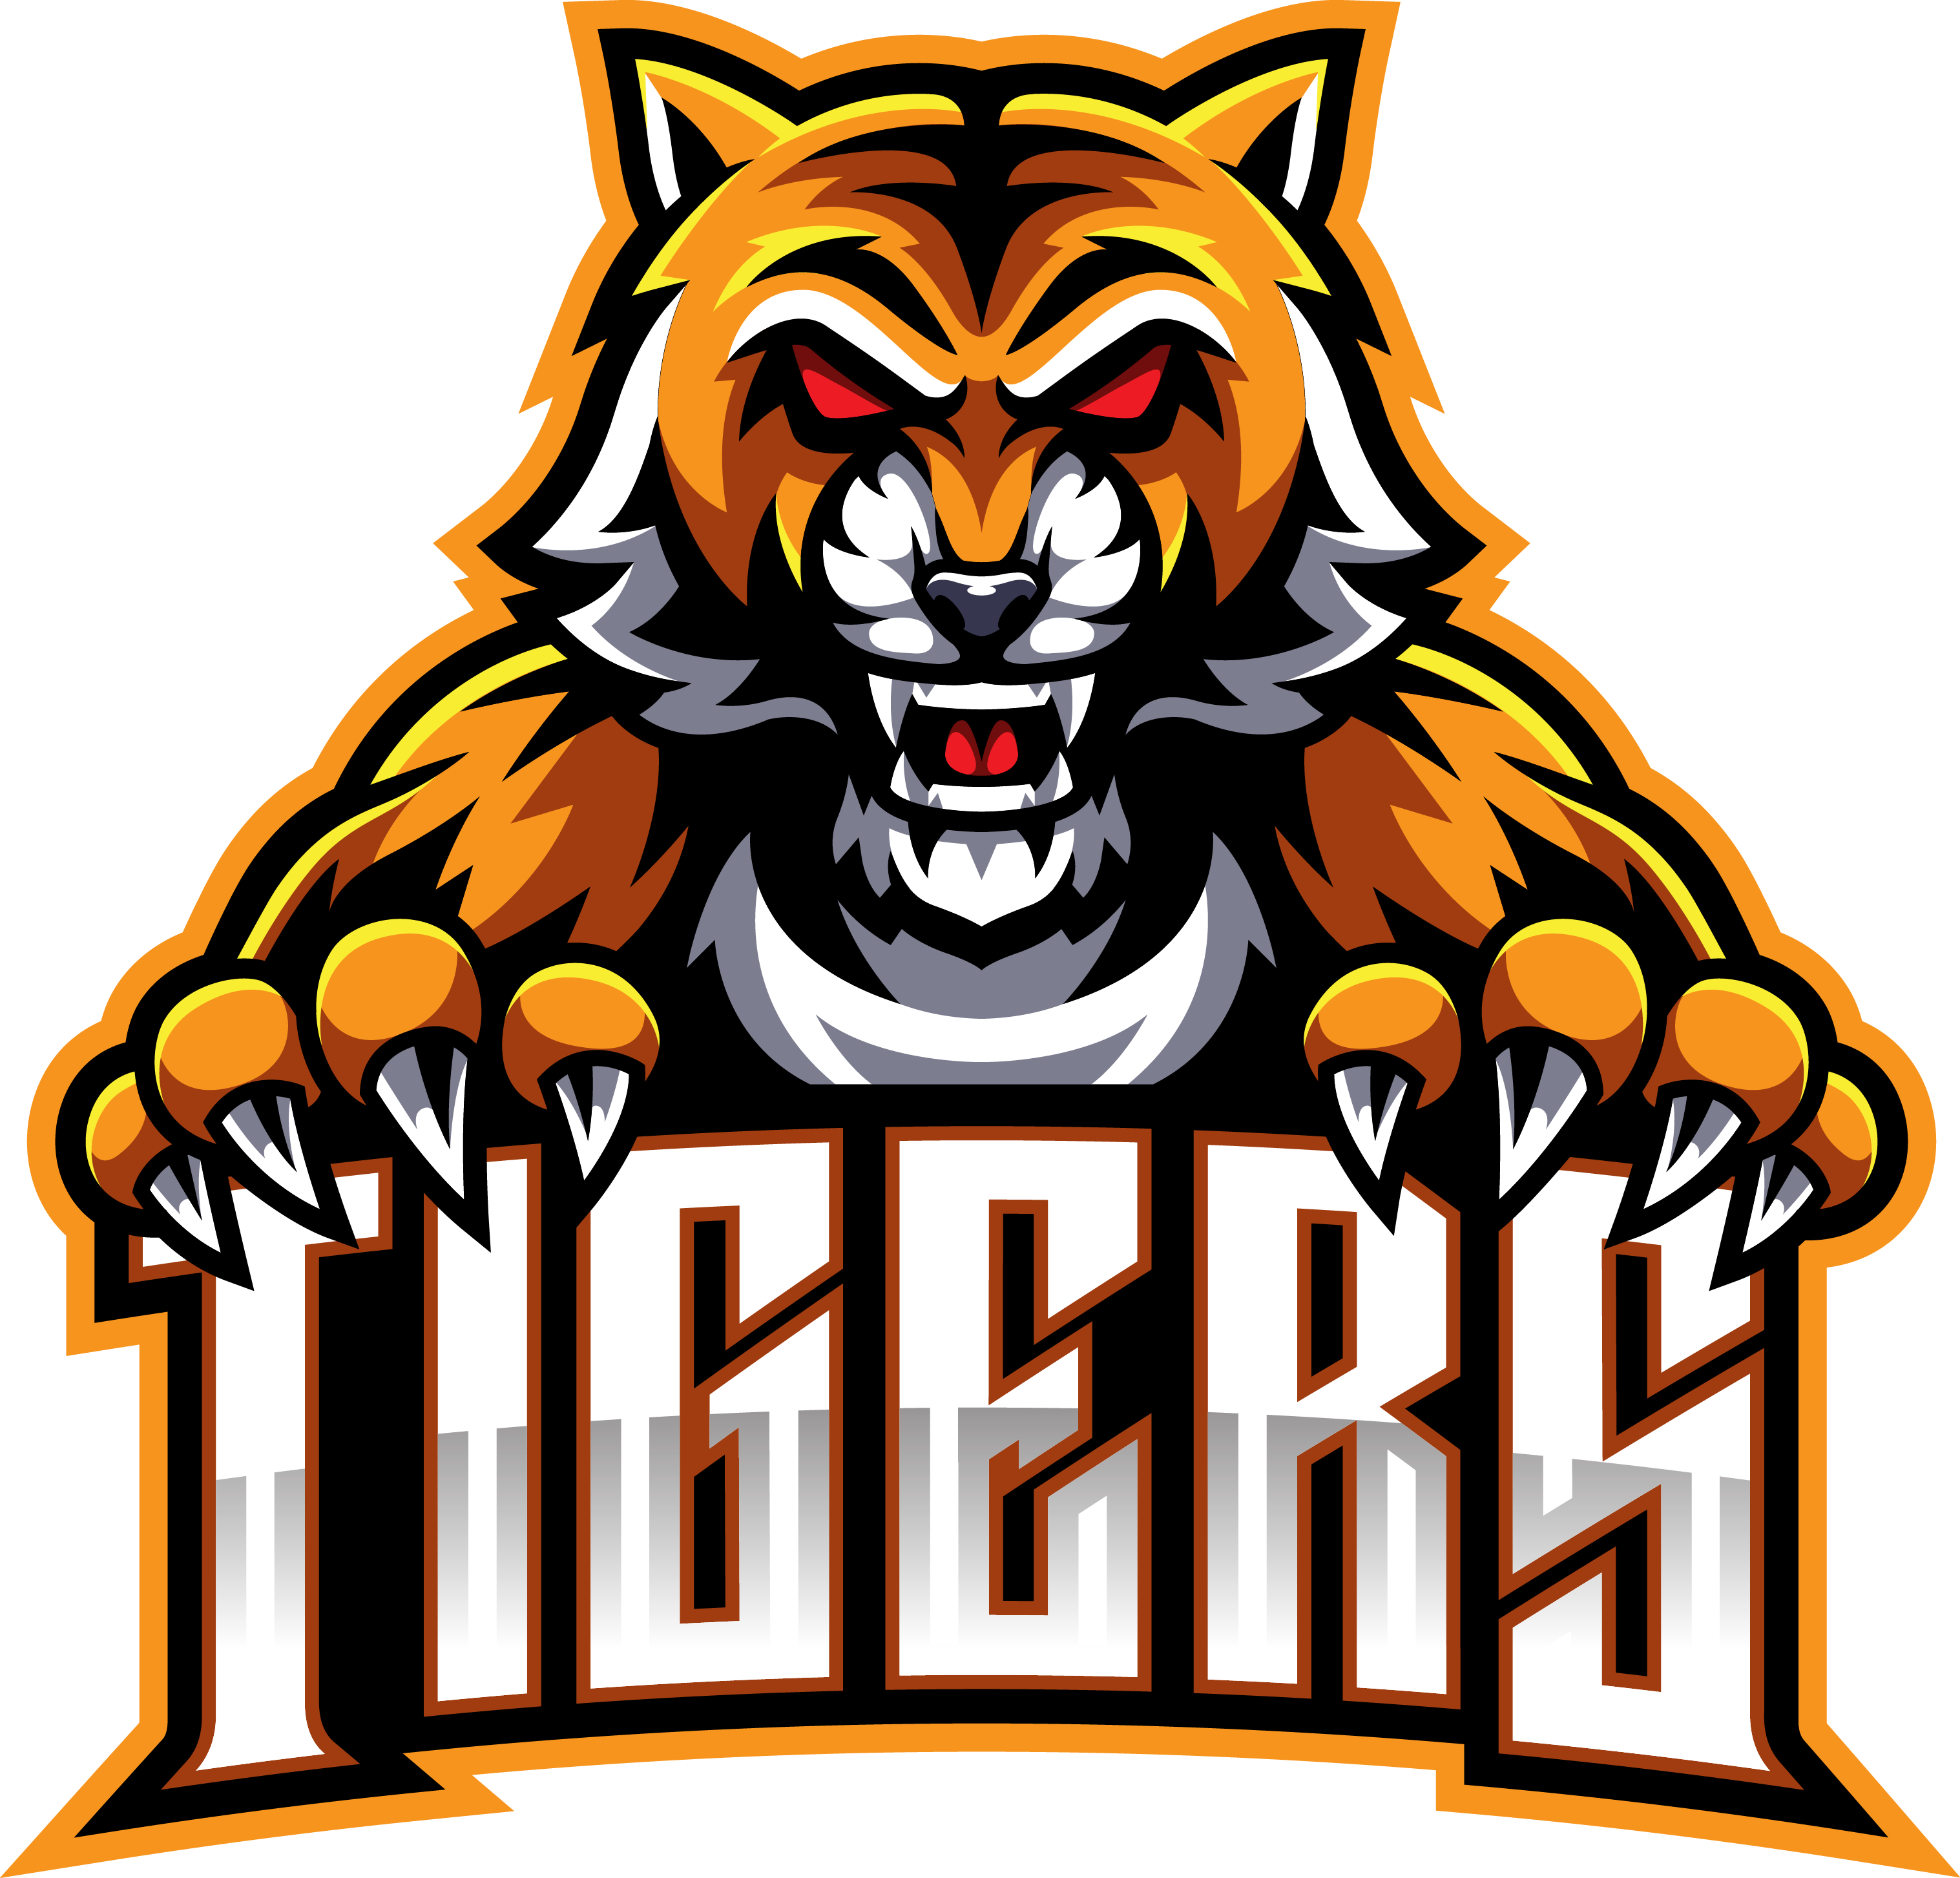 Tiger face mascot logo design By Visink TheHungryJPEG